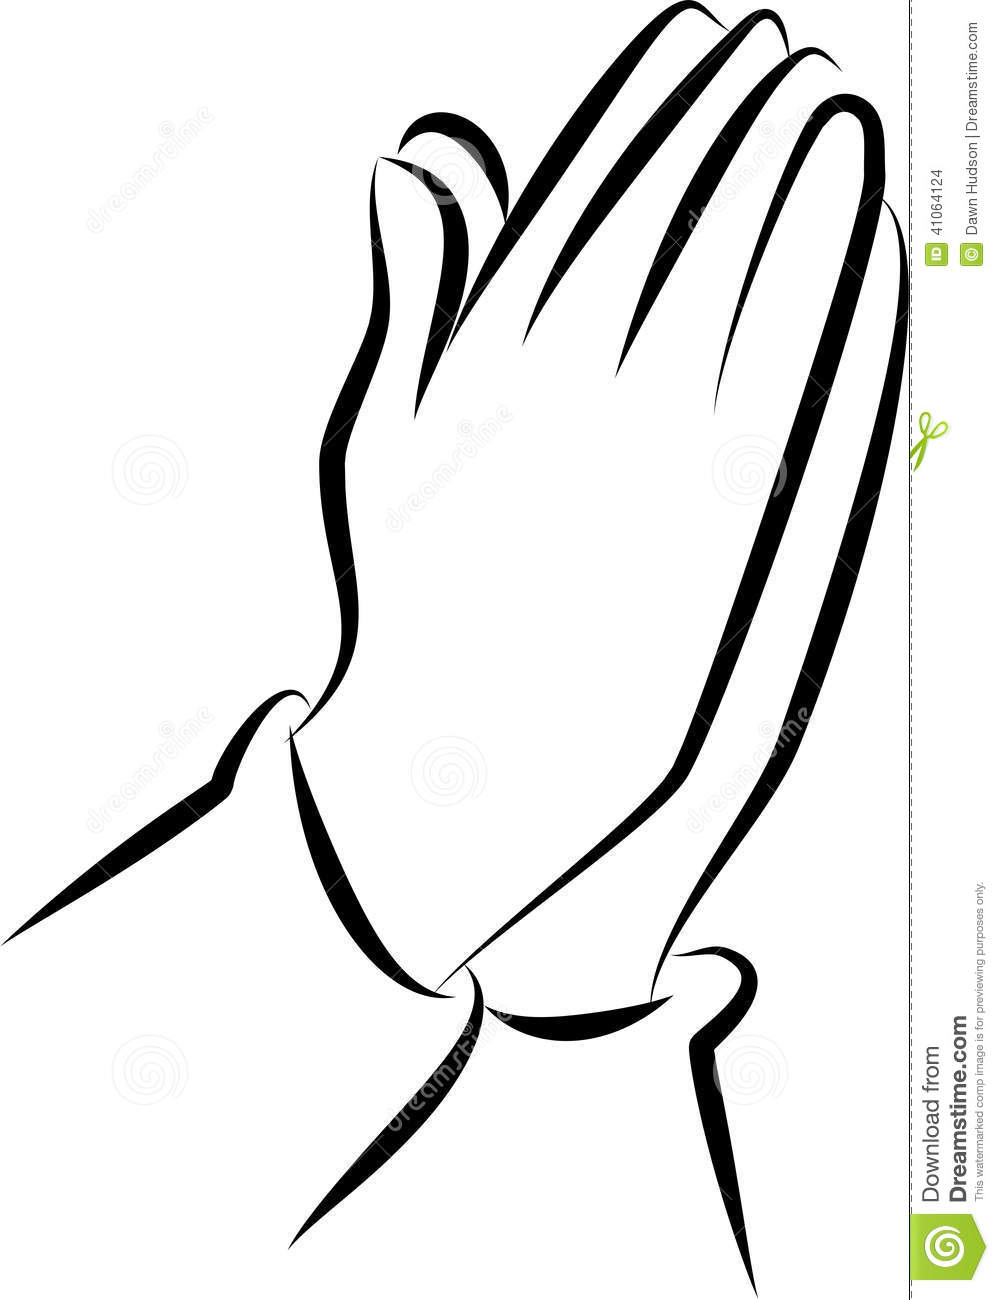 Praying Hands Clip Art Stock Illustration   Image  41064124